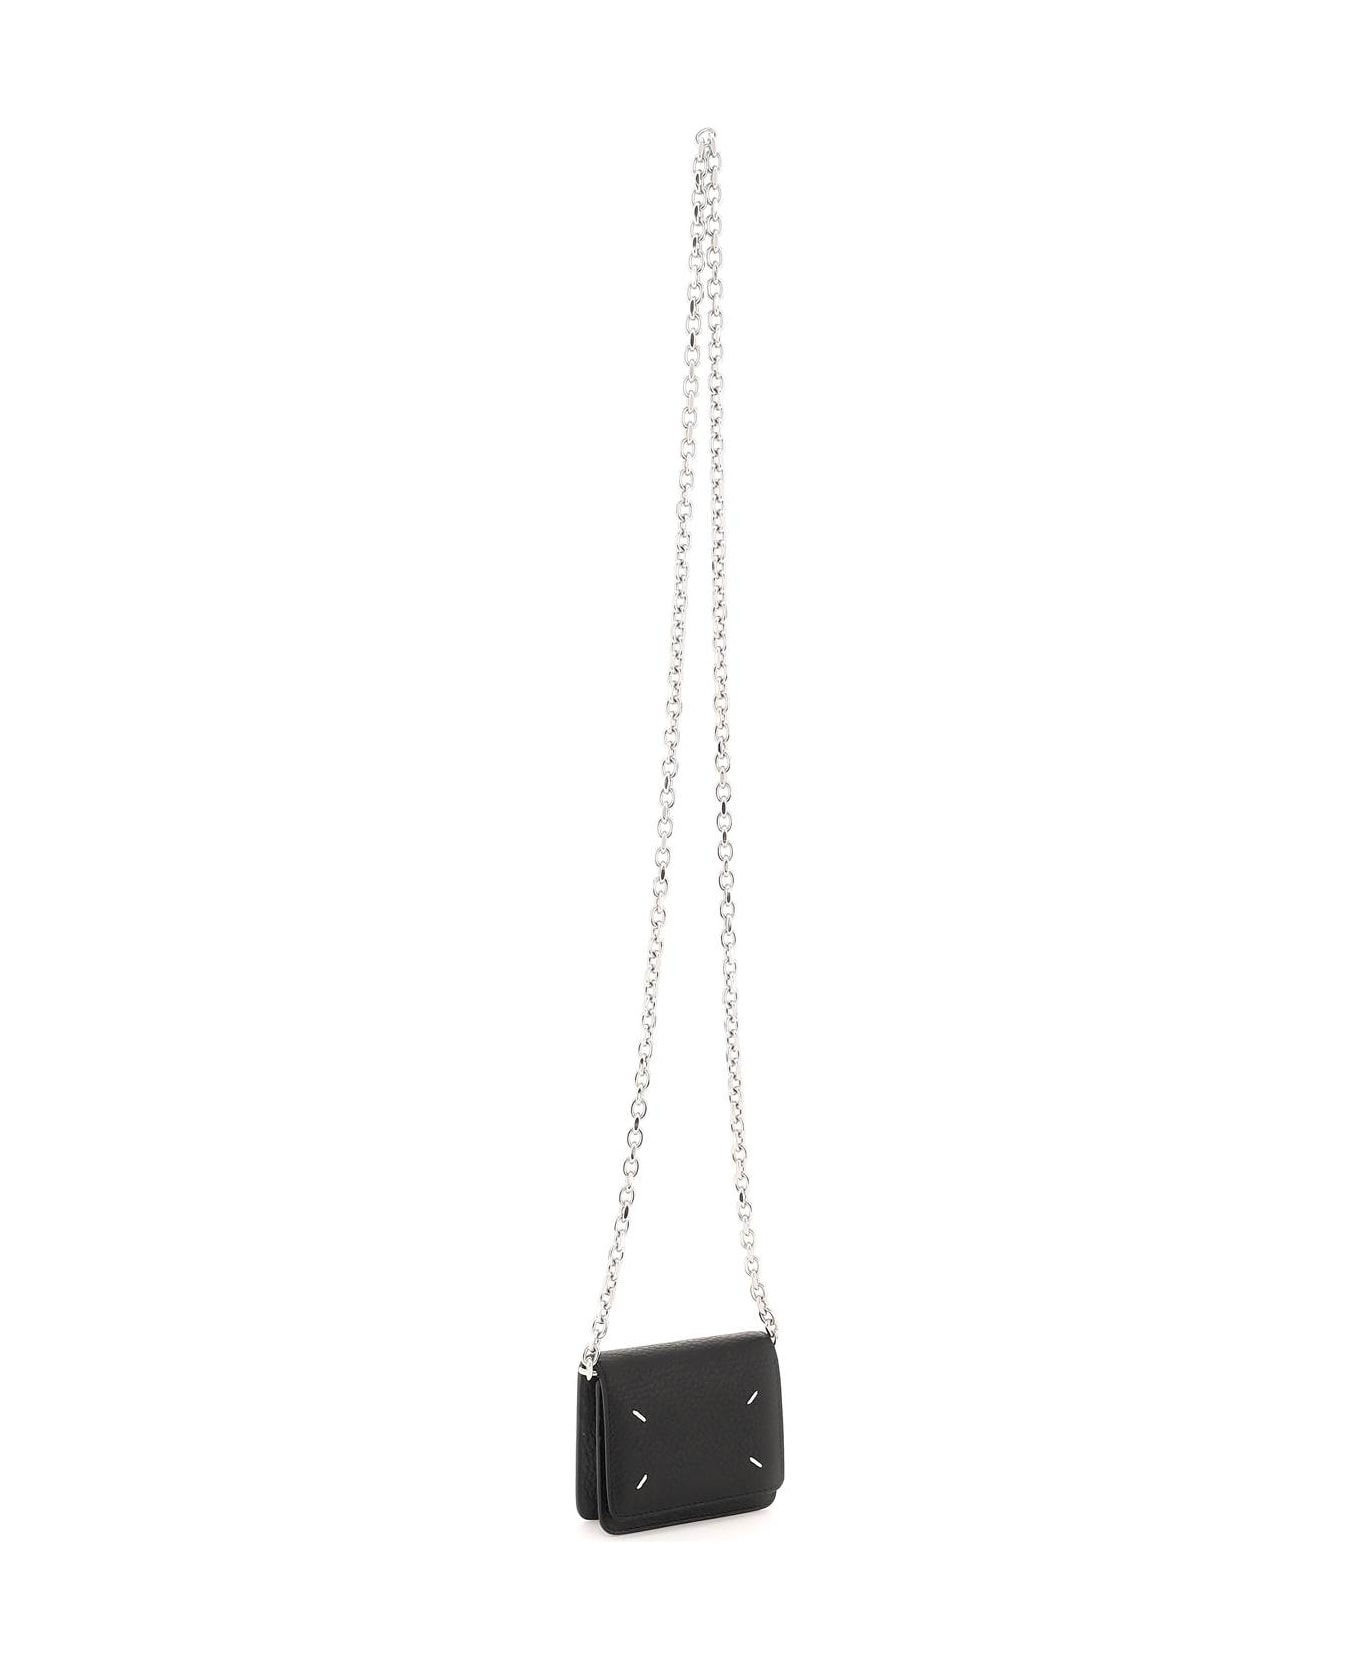 Maison Margiela Small Wallet With Chain Shoulder Strap - T8013 財布